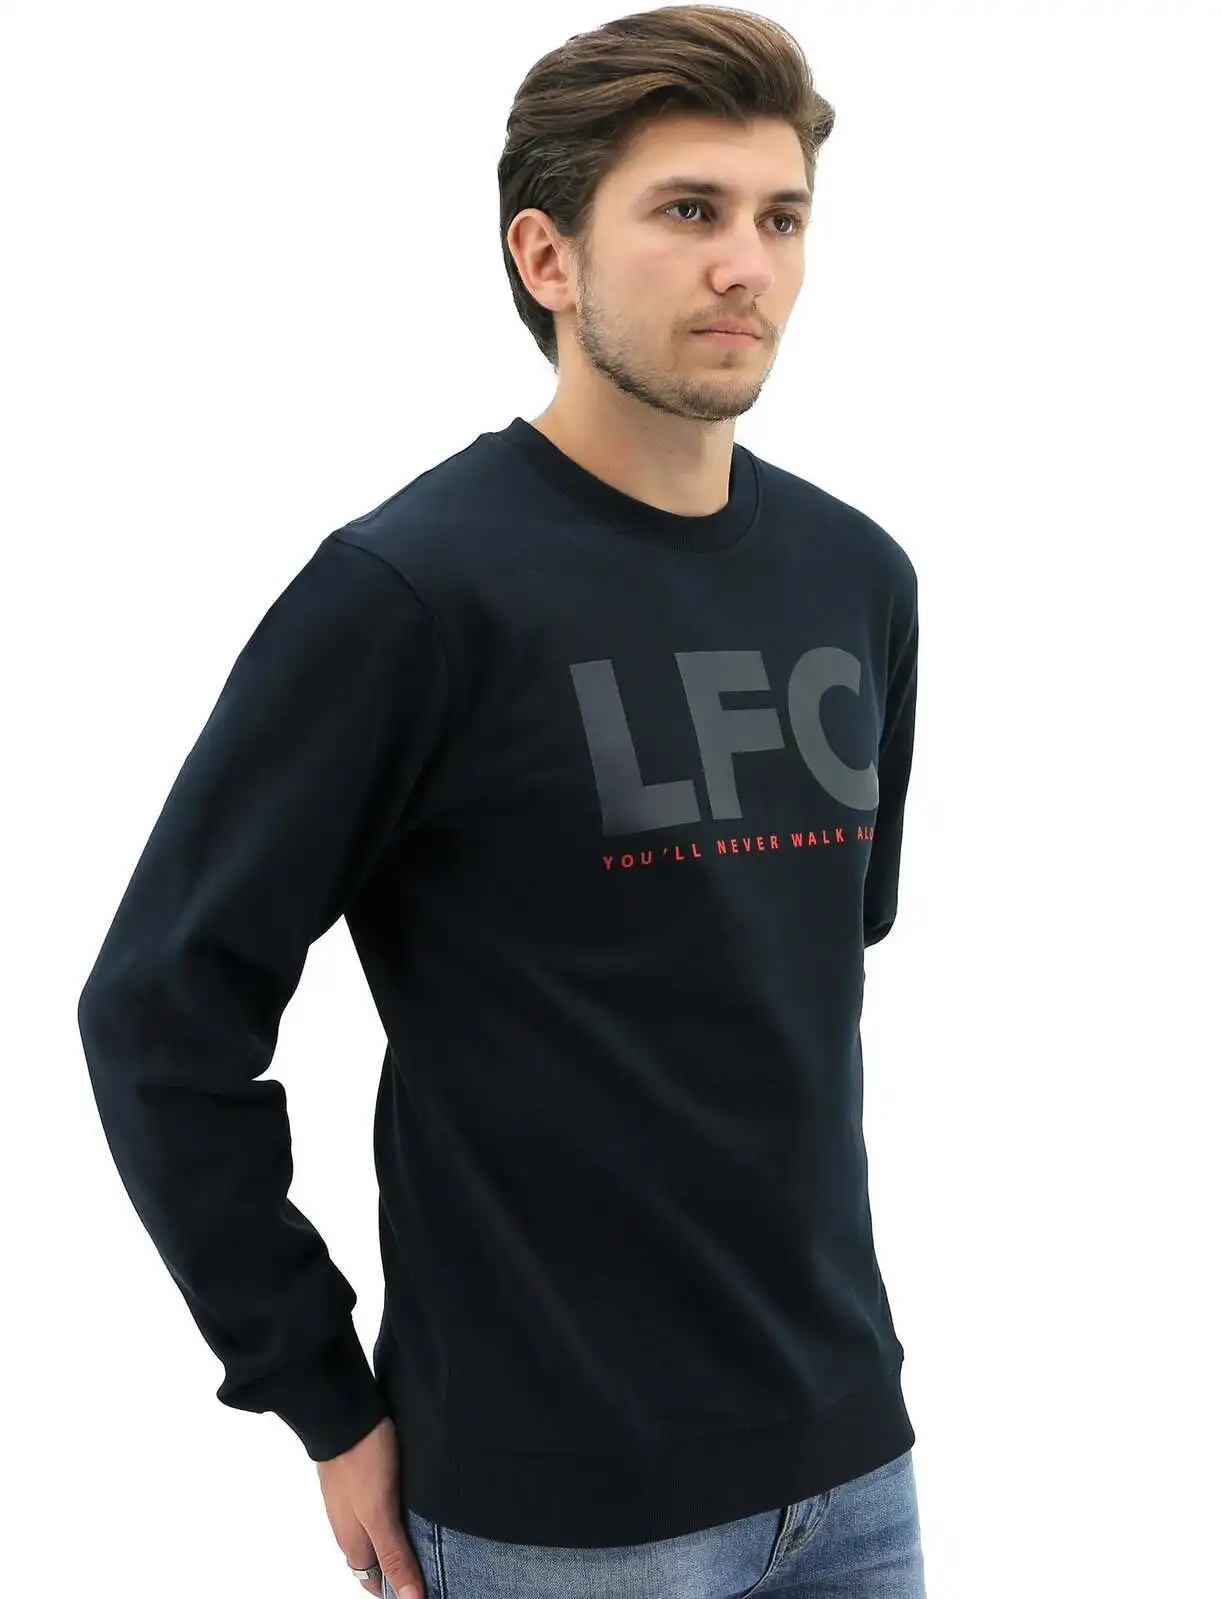 Liverpool FC Men's Crew Jumper Sweatshirt Winter Warm Soccer Football LFC - Navy